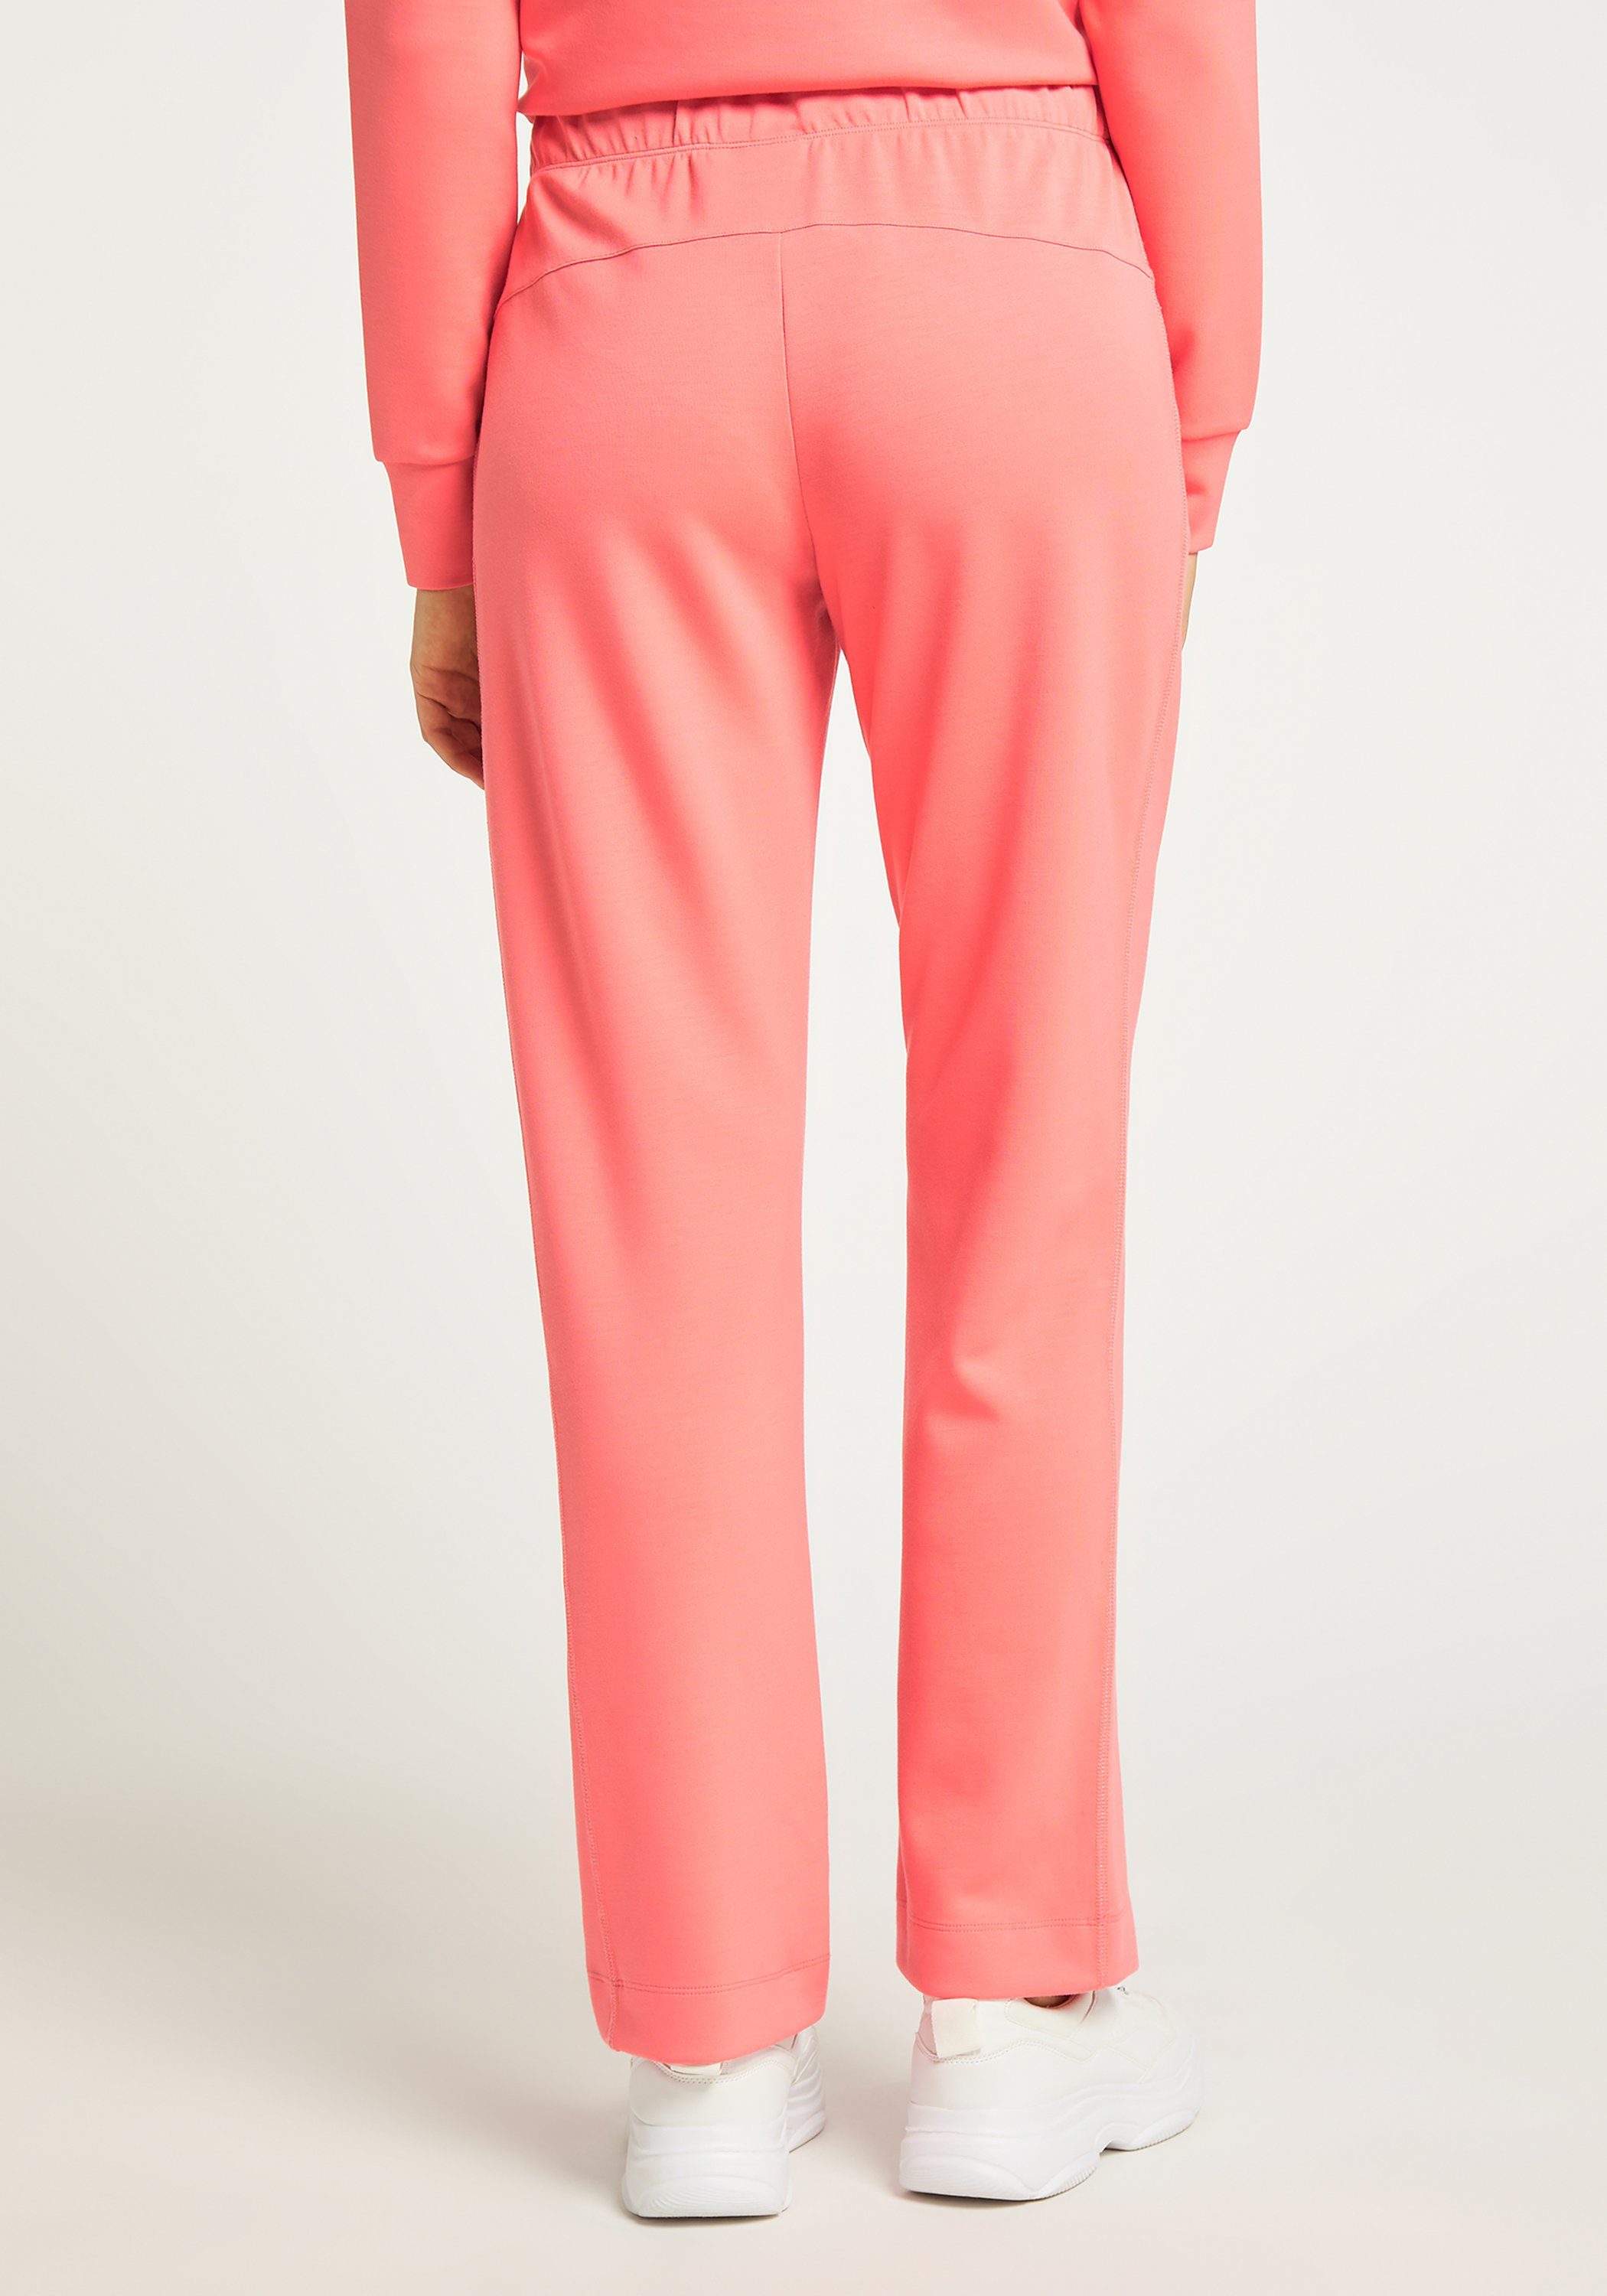 Hose coral Sporthose pink AURORA Joy Sportswear